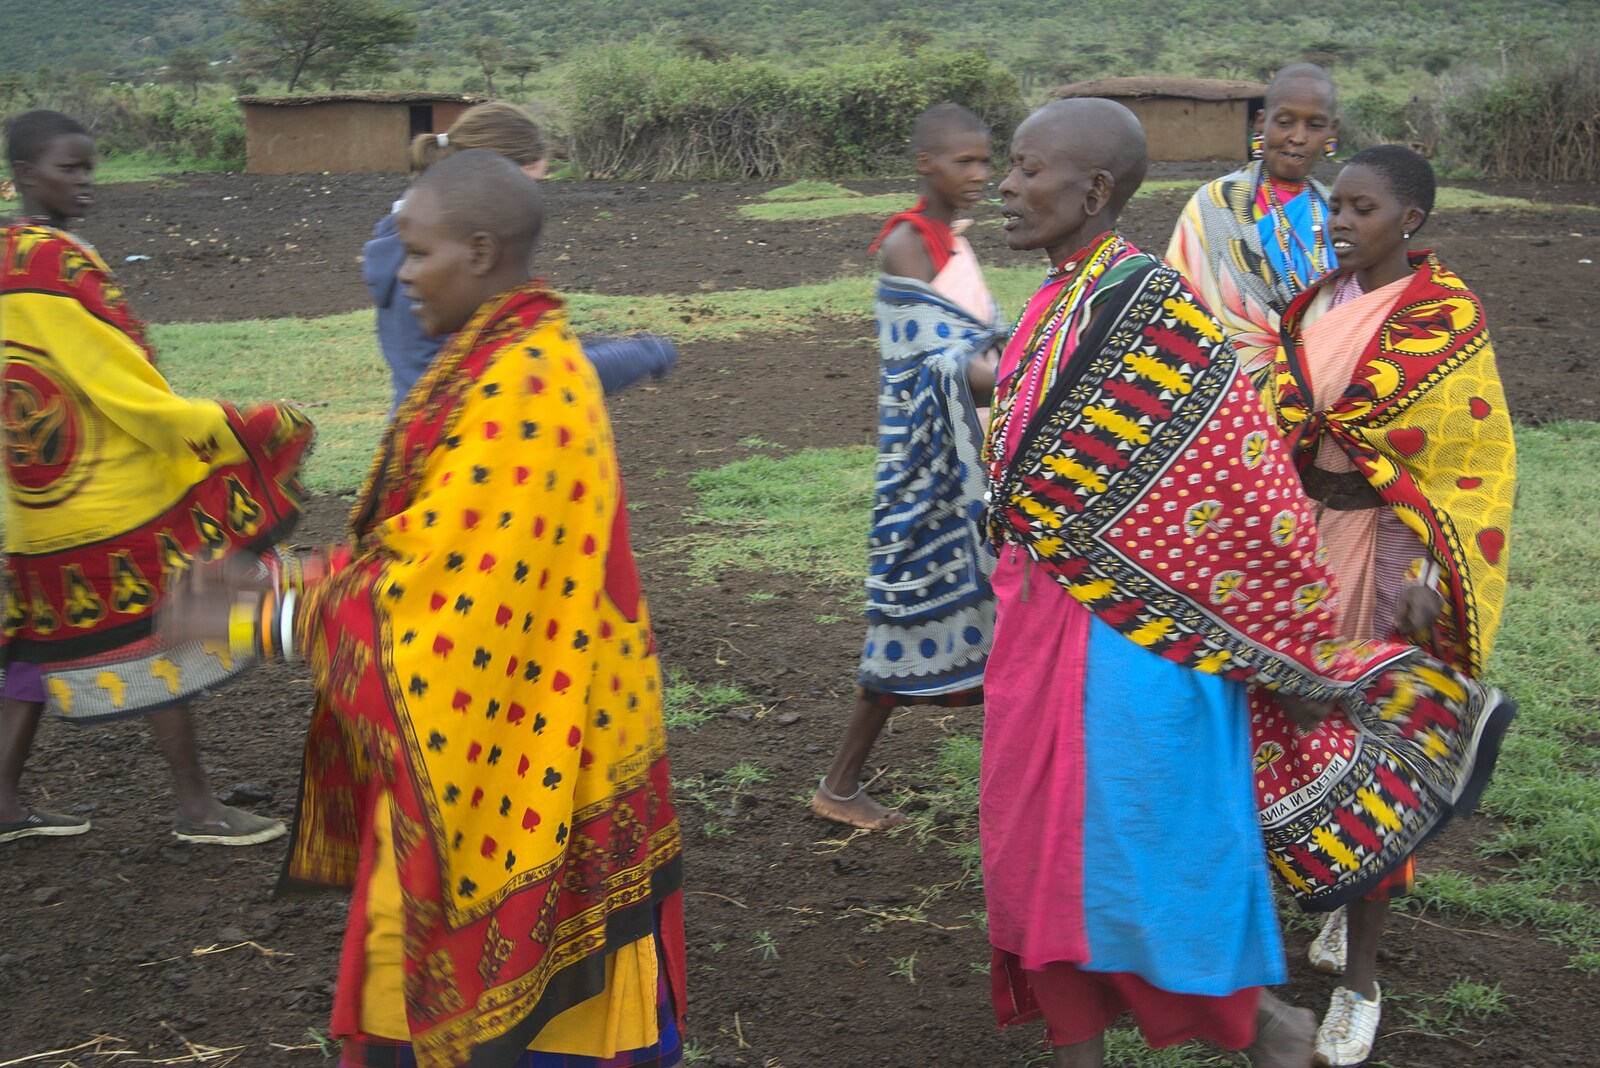 Maasai Mara Safari and a Maasai Village, Ololaimutia, Kenya - 5th November 2010: More mournful dancing